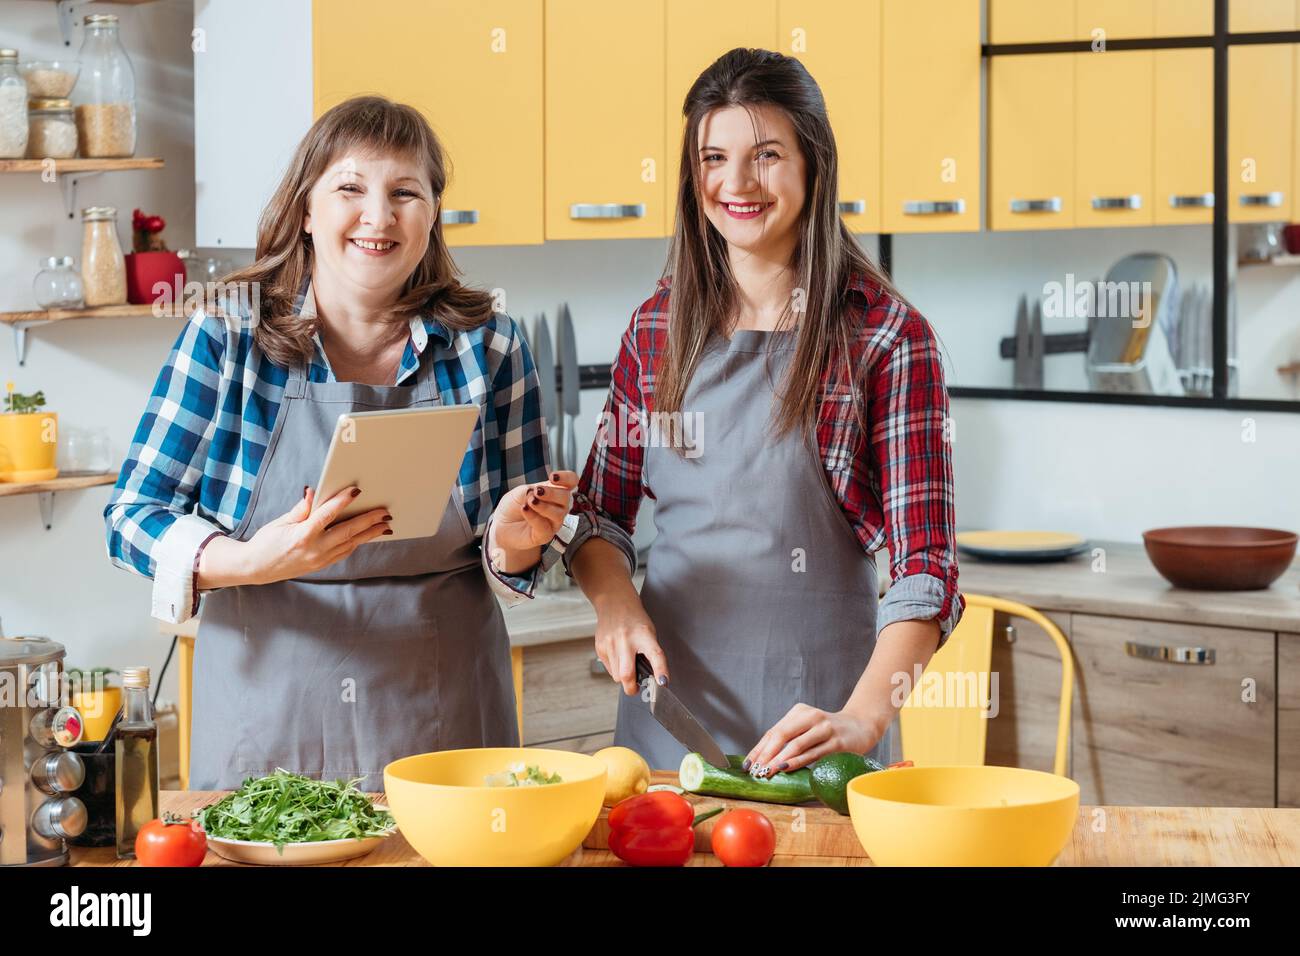 healthy diet family kitchen leisure new recipe Stock Photo